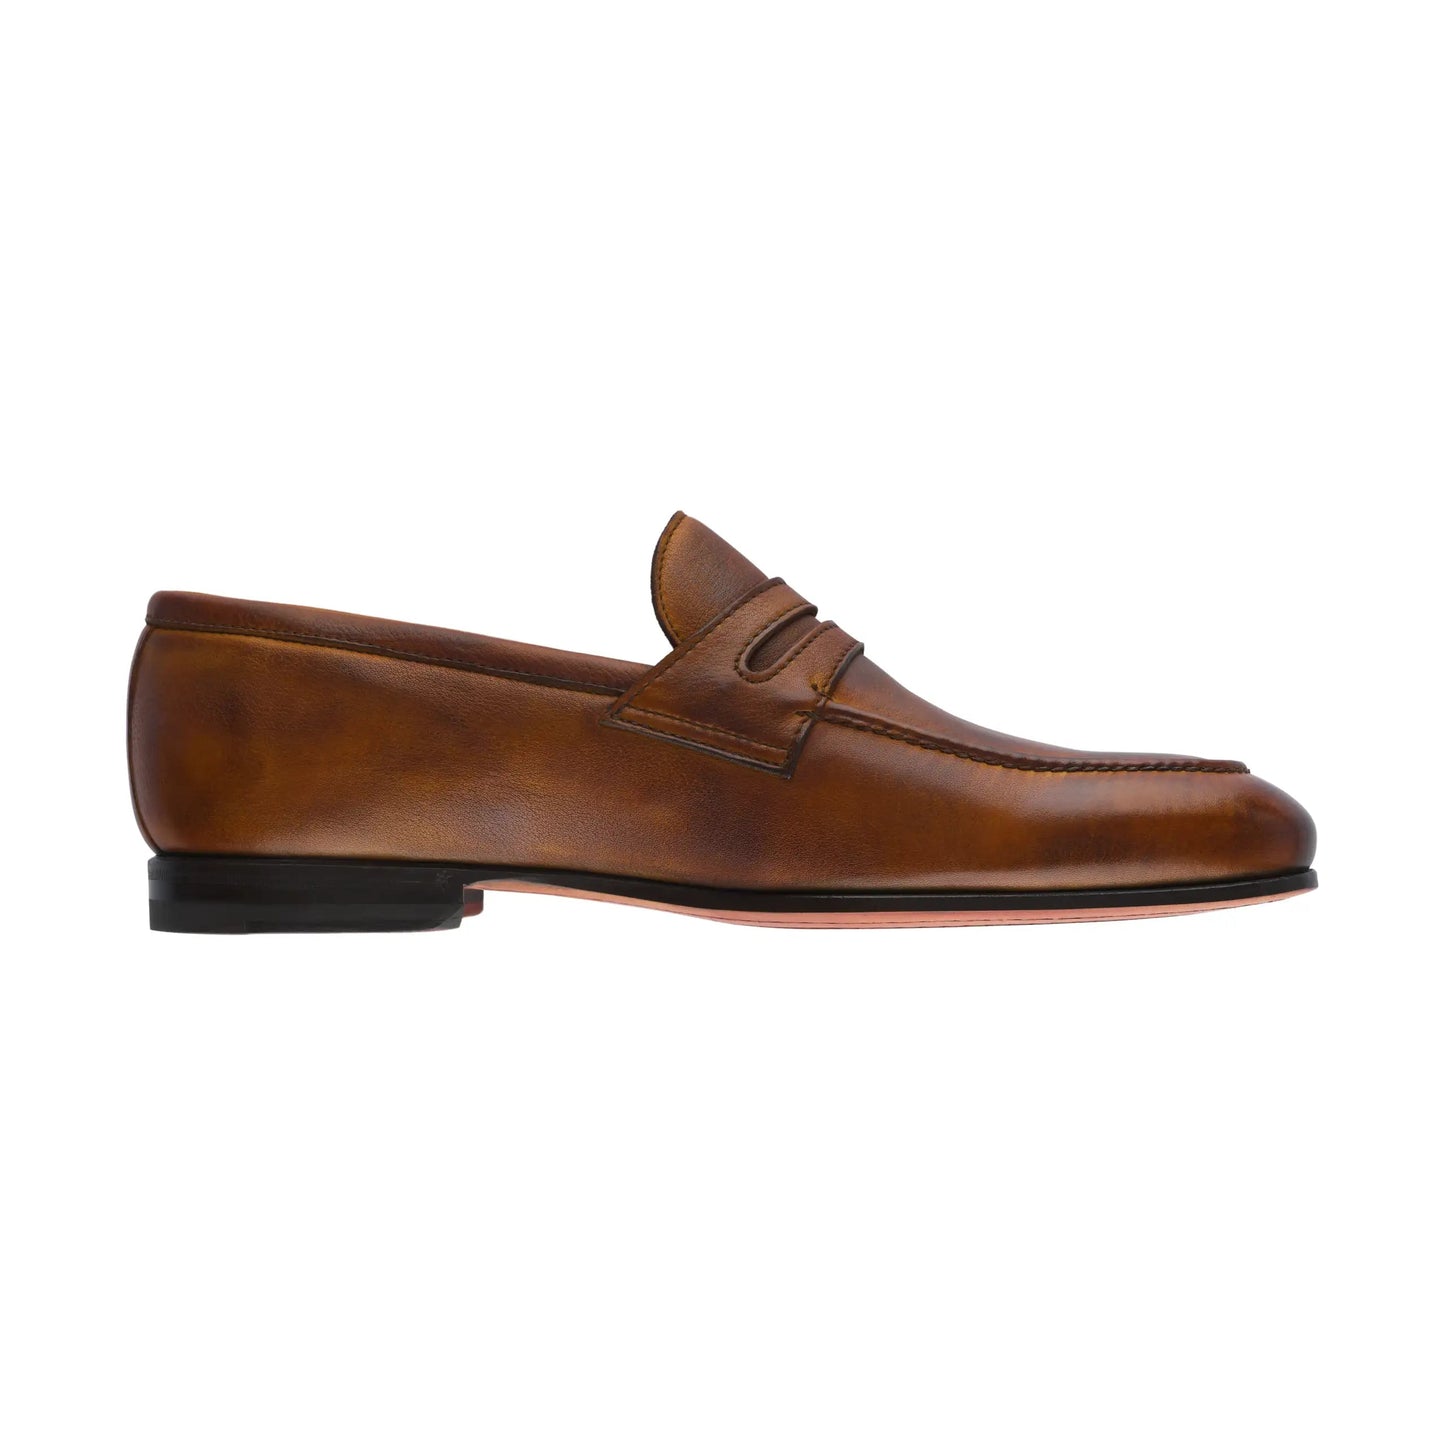 Bontoni "Principe II" Soft Leather Loafer in Cognac Brown - SARTALE